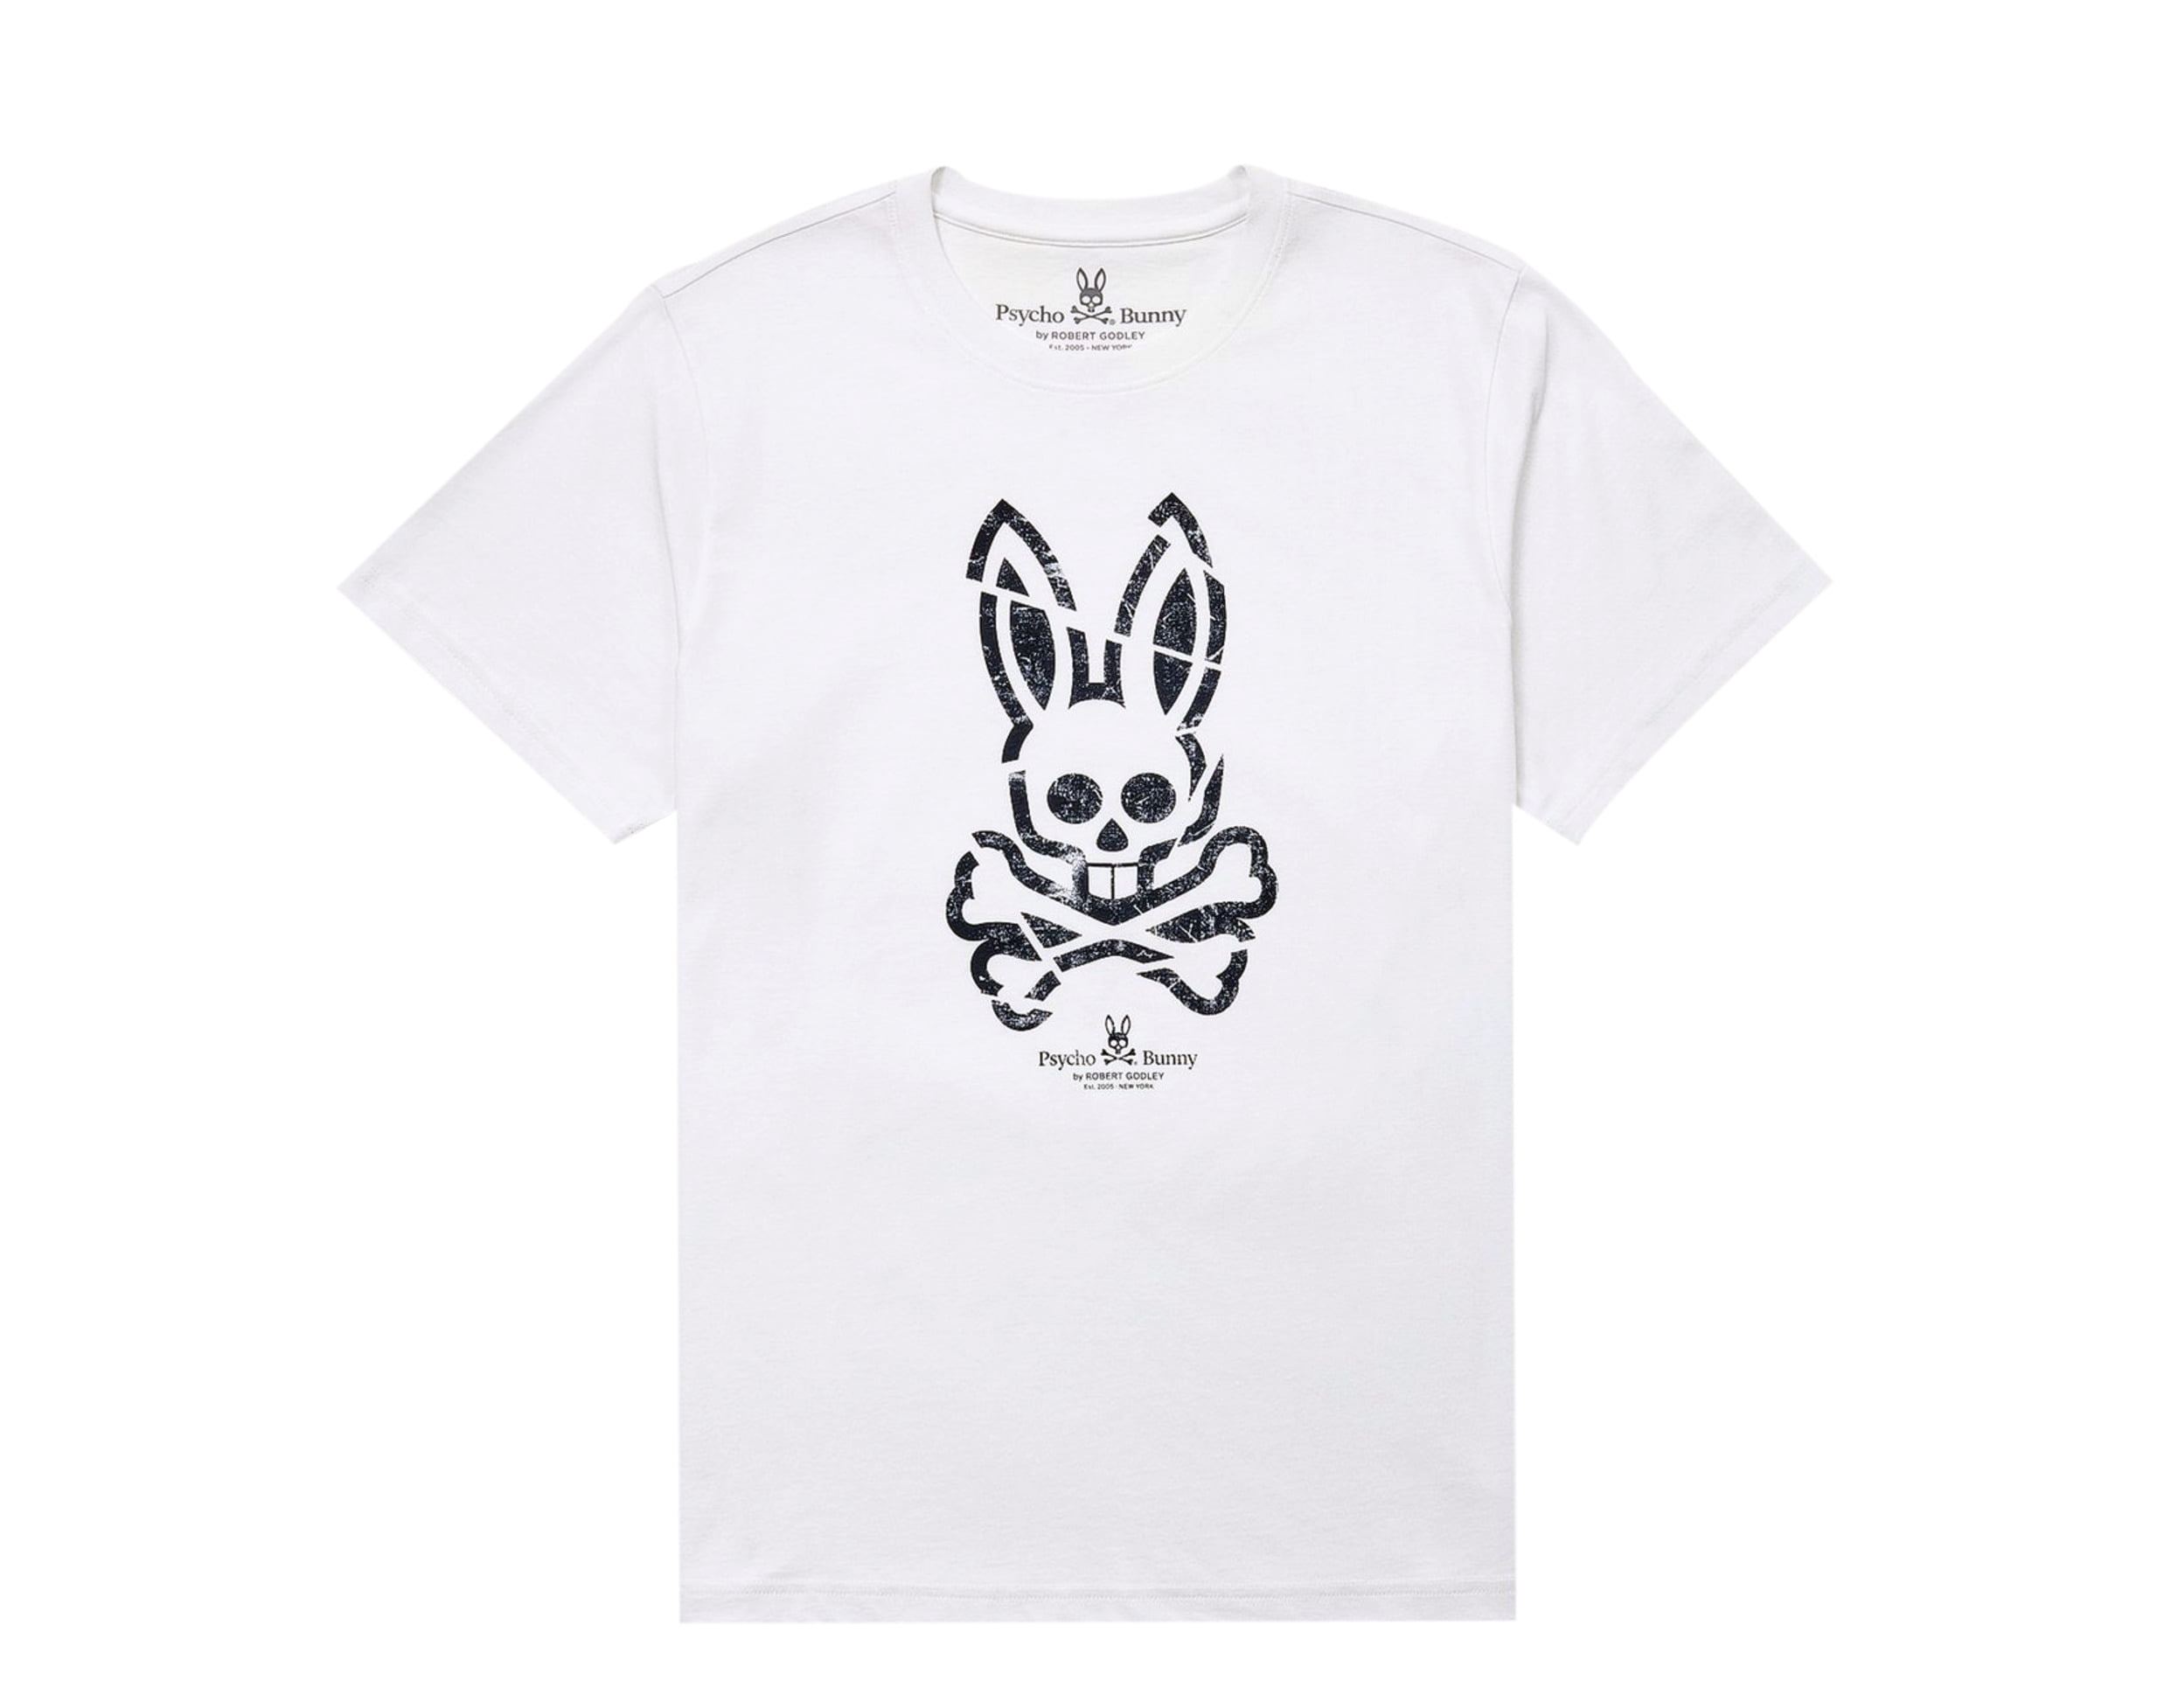 Only bunny. Футболка бренда Psycho Bunny. Crazy Bunny одежда. Diesel Bunny Print рубашка.